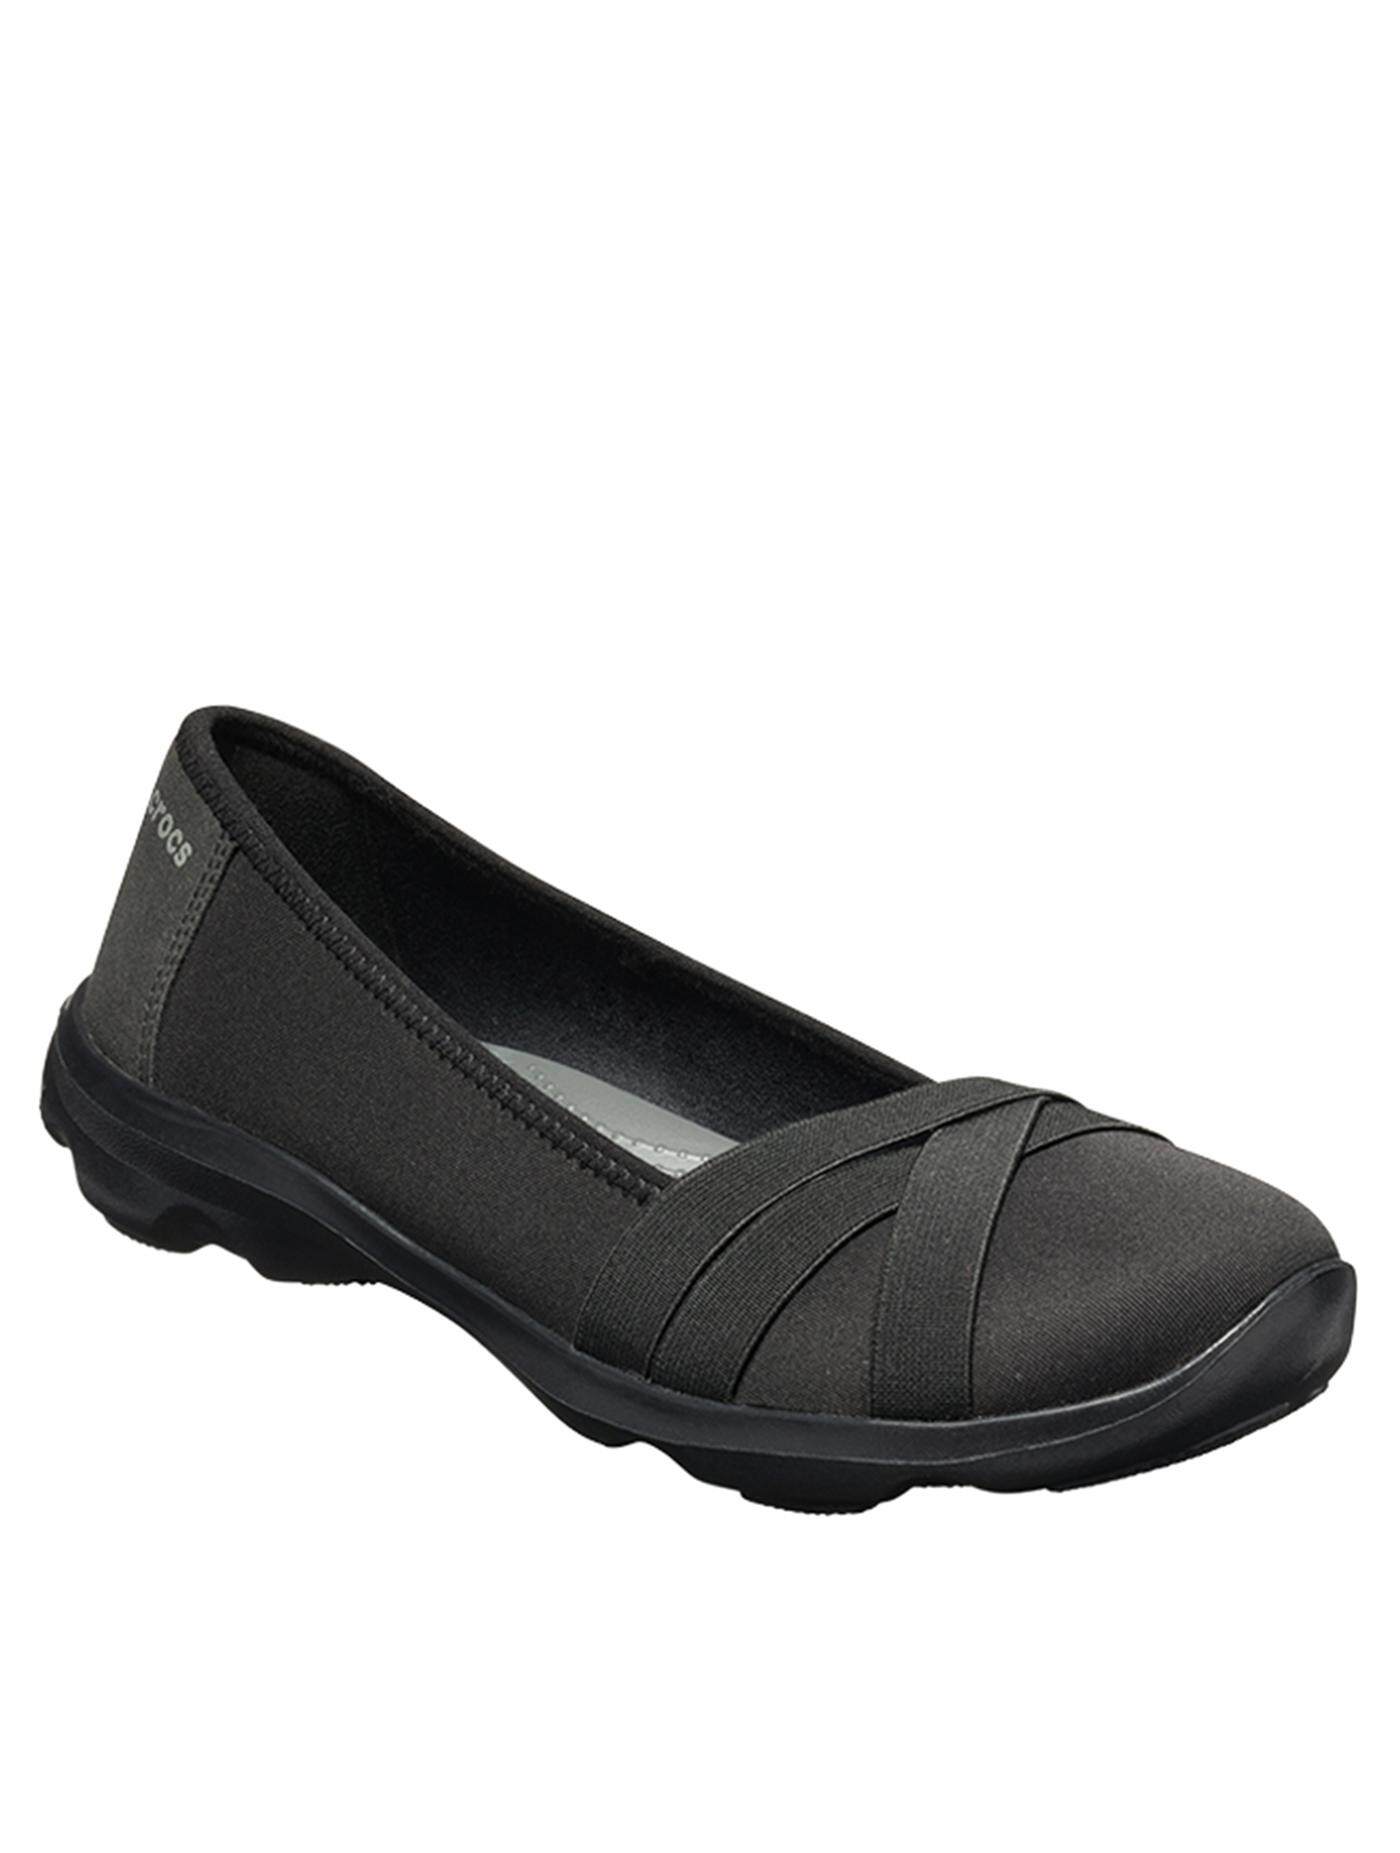 CROCS รองเท้าลำลองผู้หญิง รุ่น Busy Day Strappy Flat BD STP FLT ไซส์ W7 สีดำ-เทา